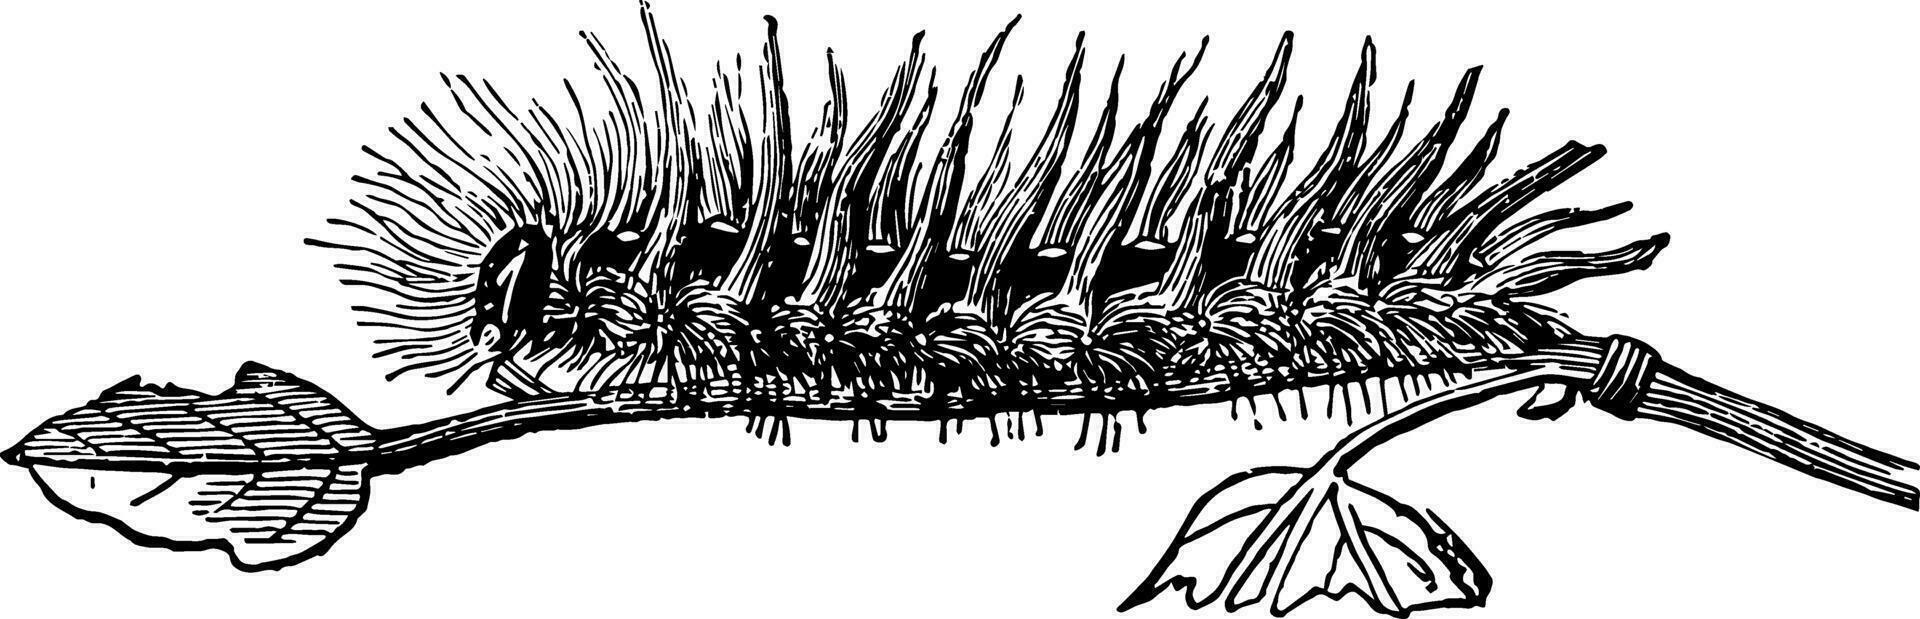 larva do acronycta aceris vintage ilustração. vetor